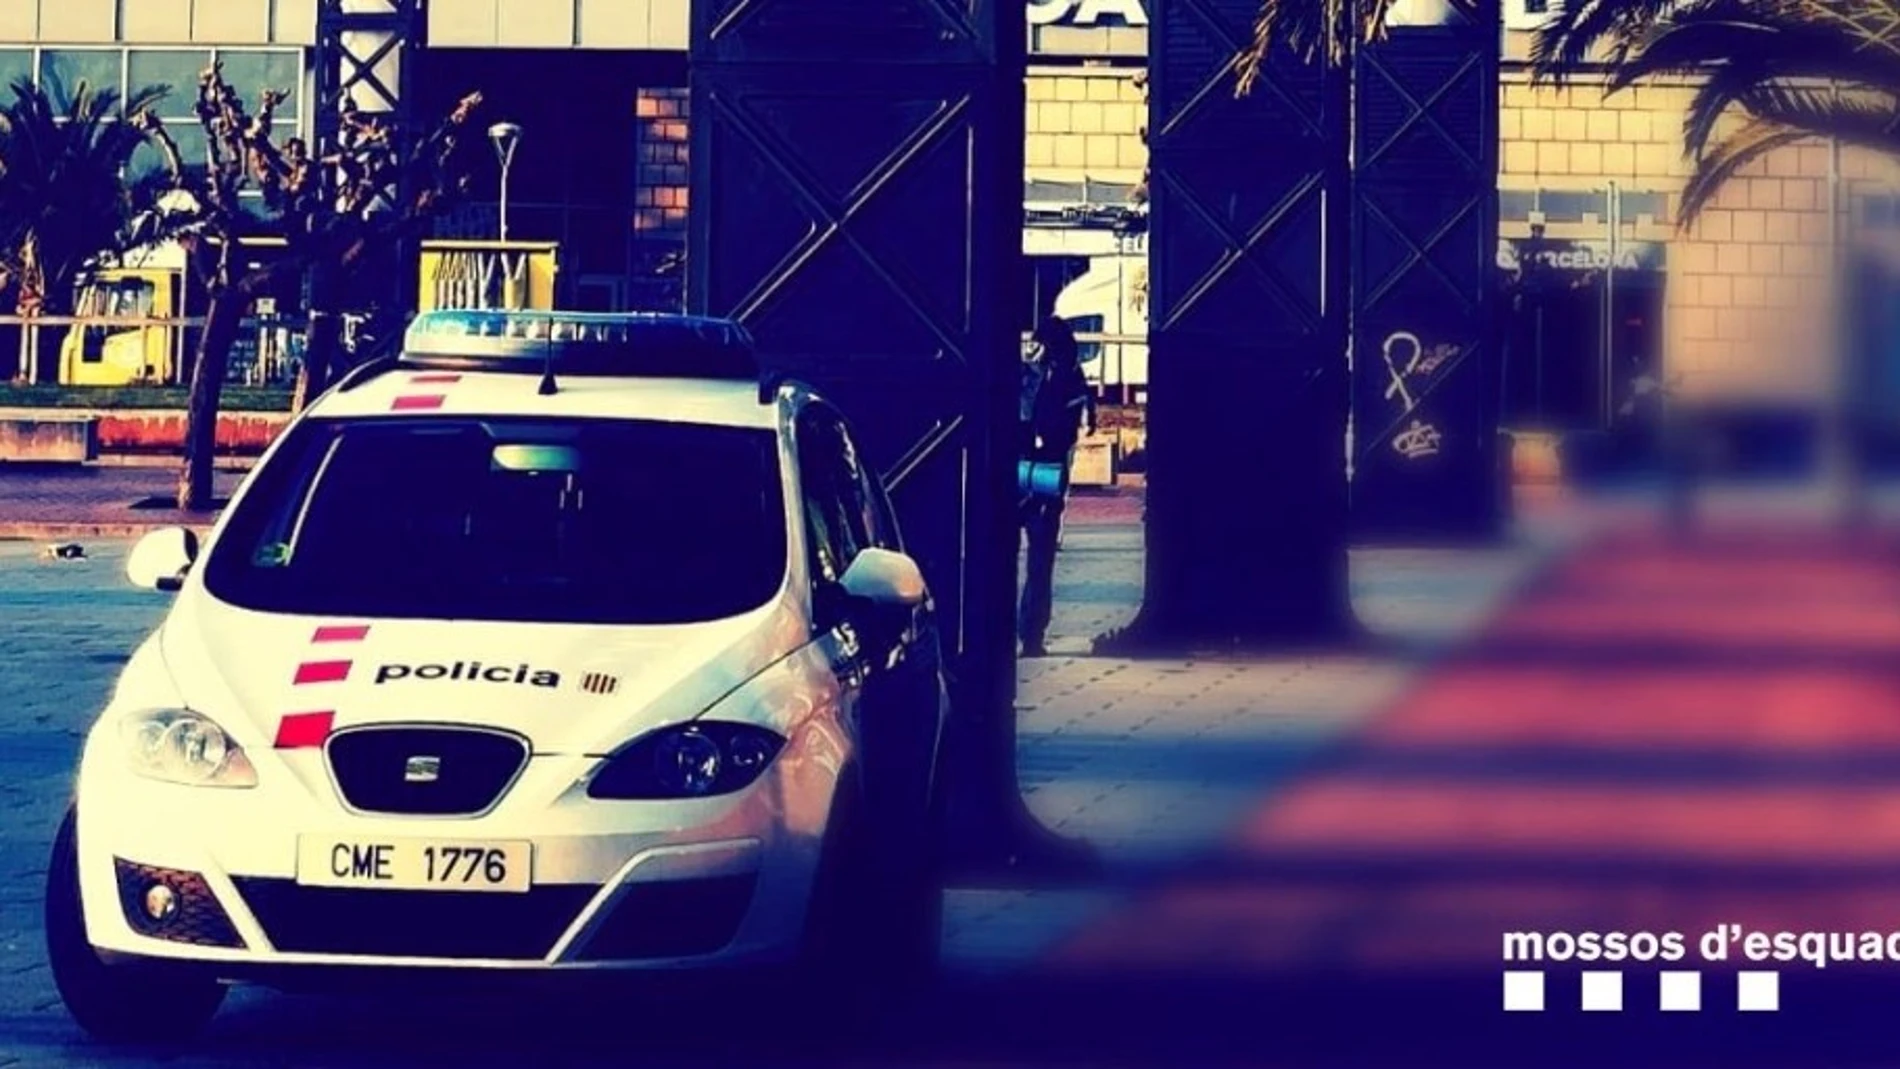 Sucesos.- Otros dos detenidos por asaltar a un turista en un taxi en Barcelona